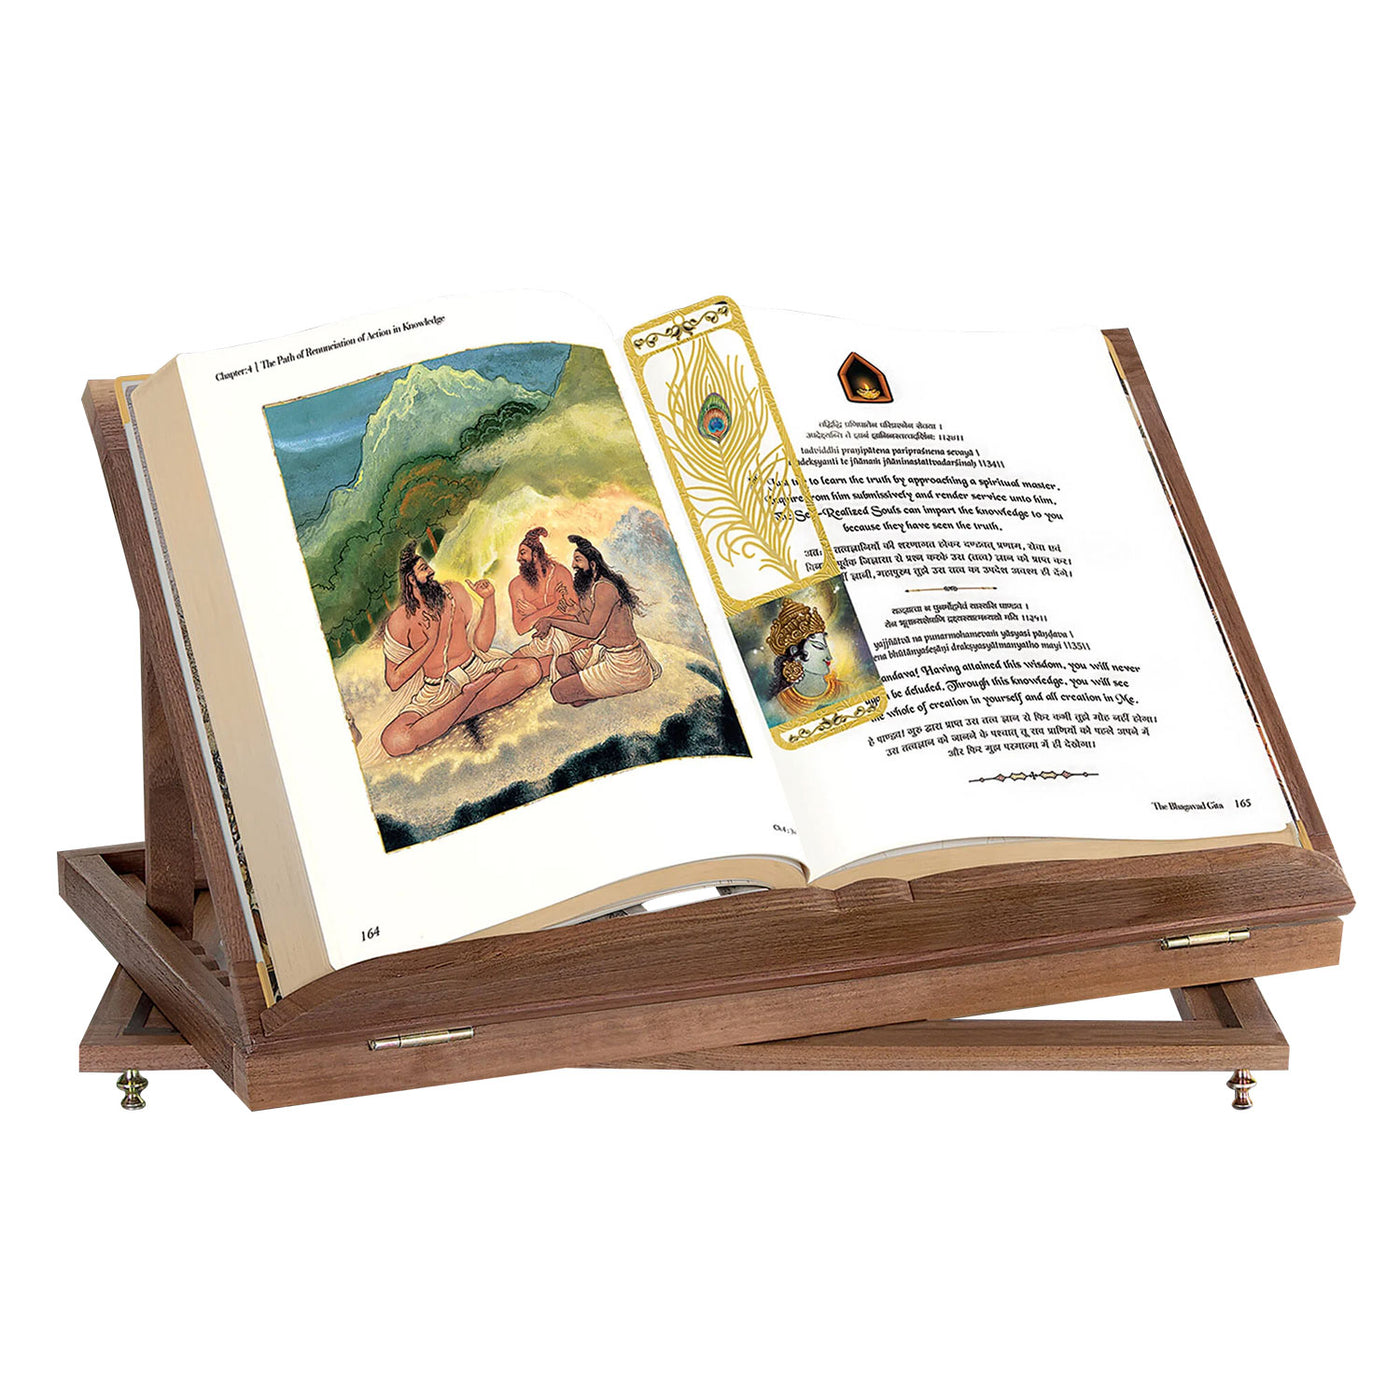 The Bhagavad Gita Book With Reading Stand (Signature Edition)